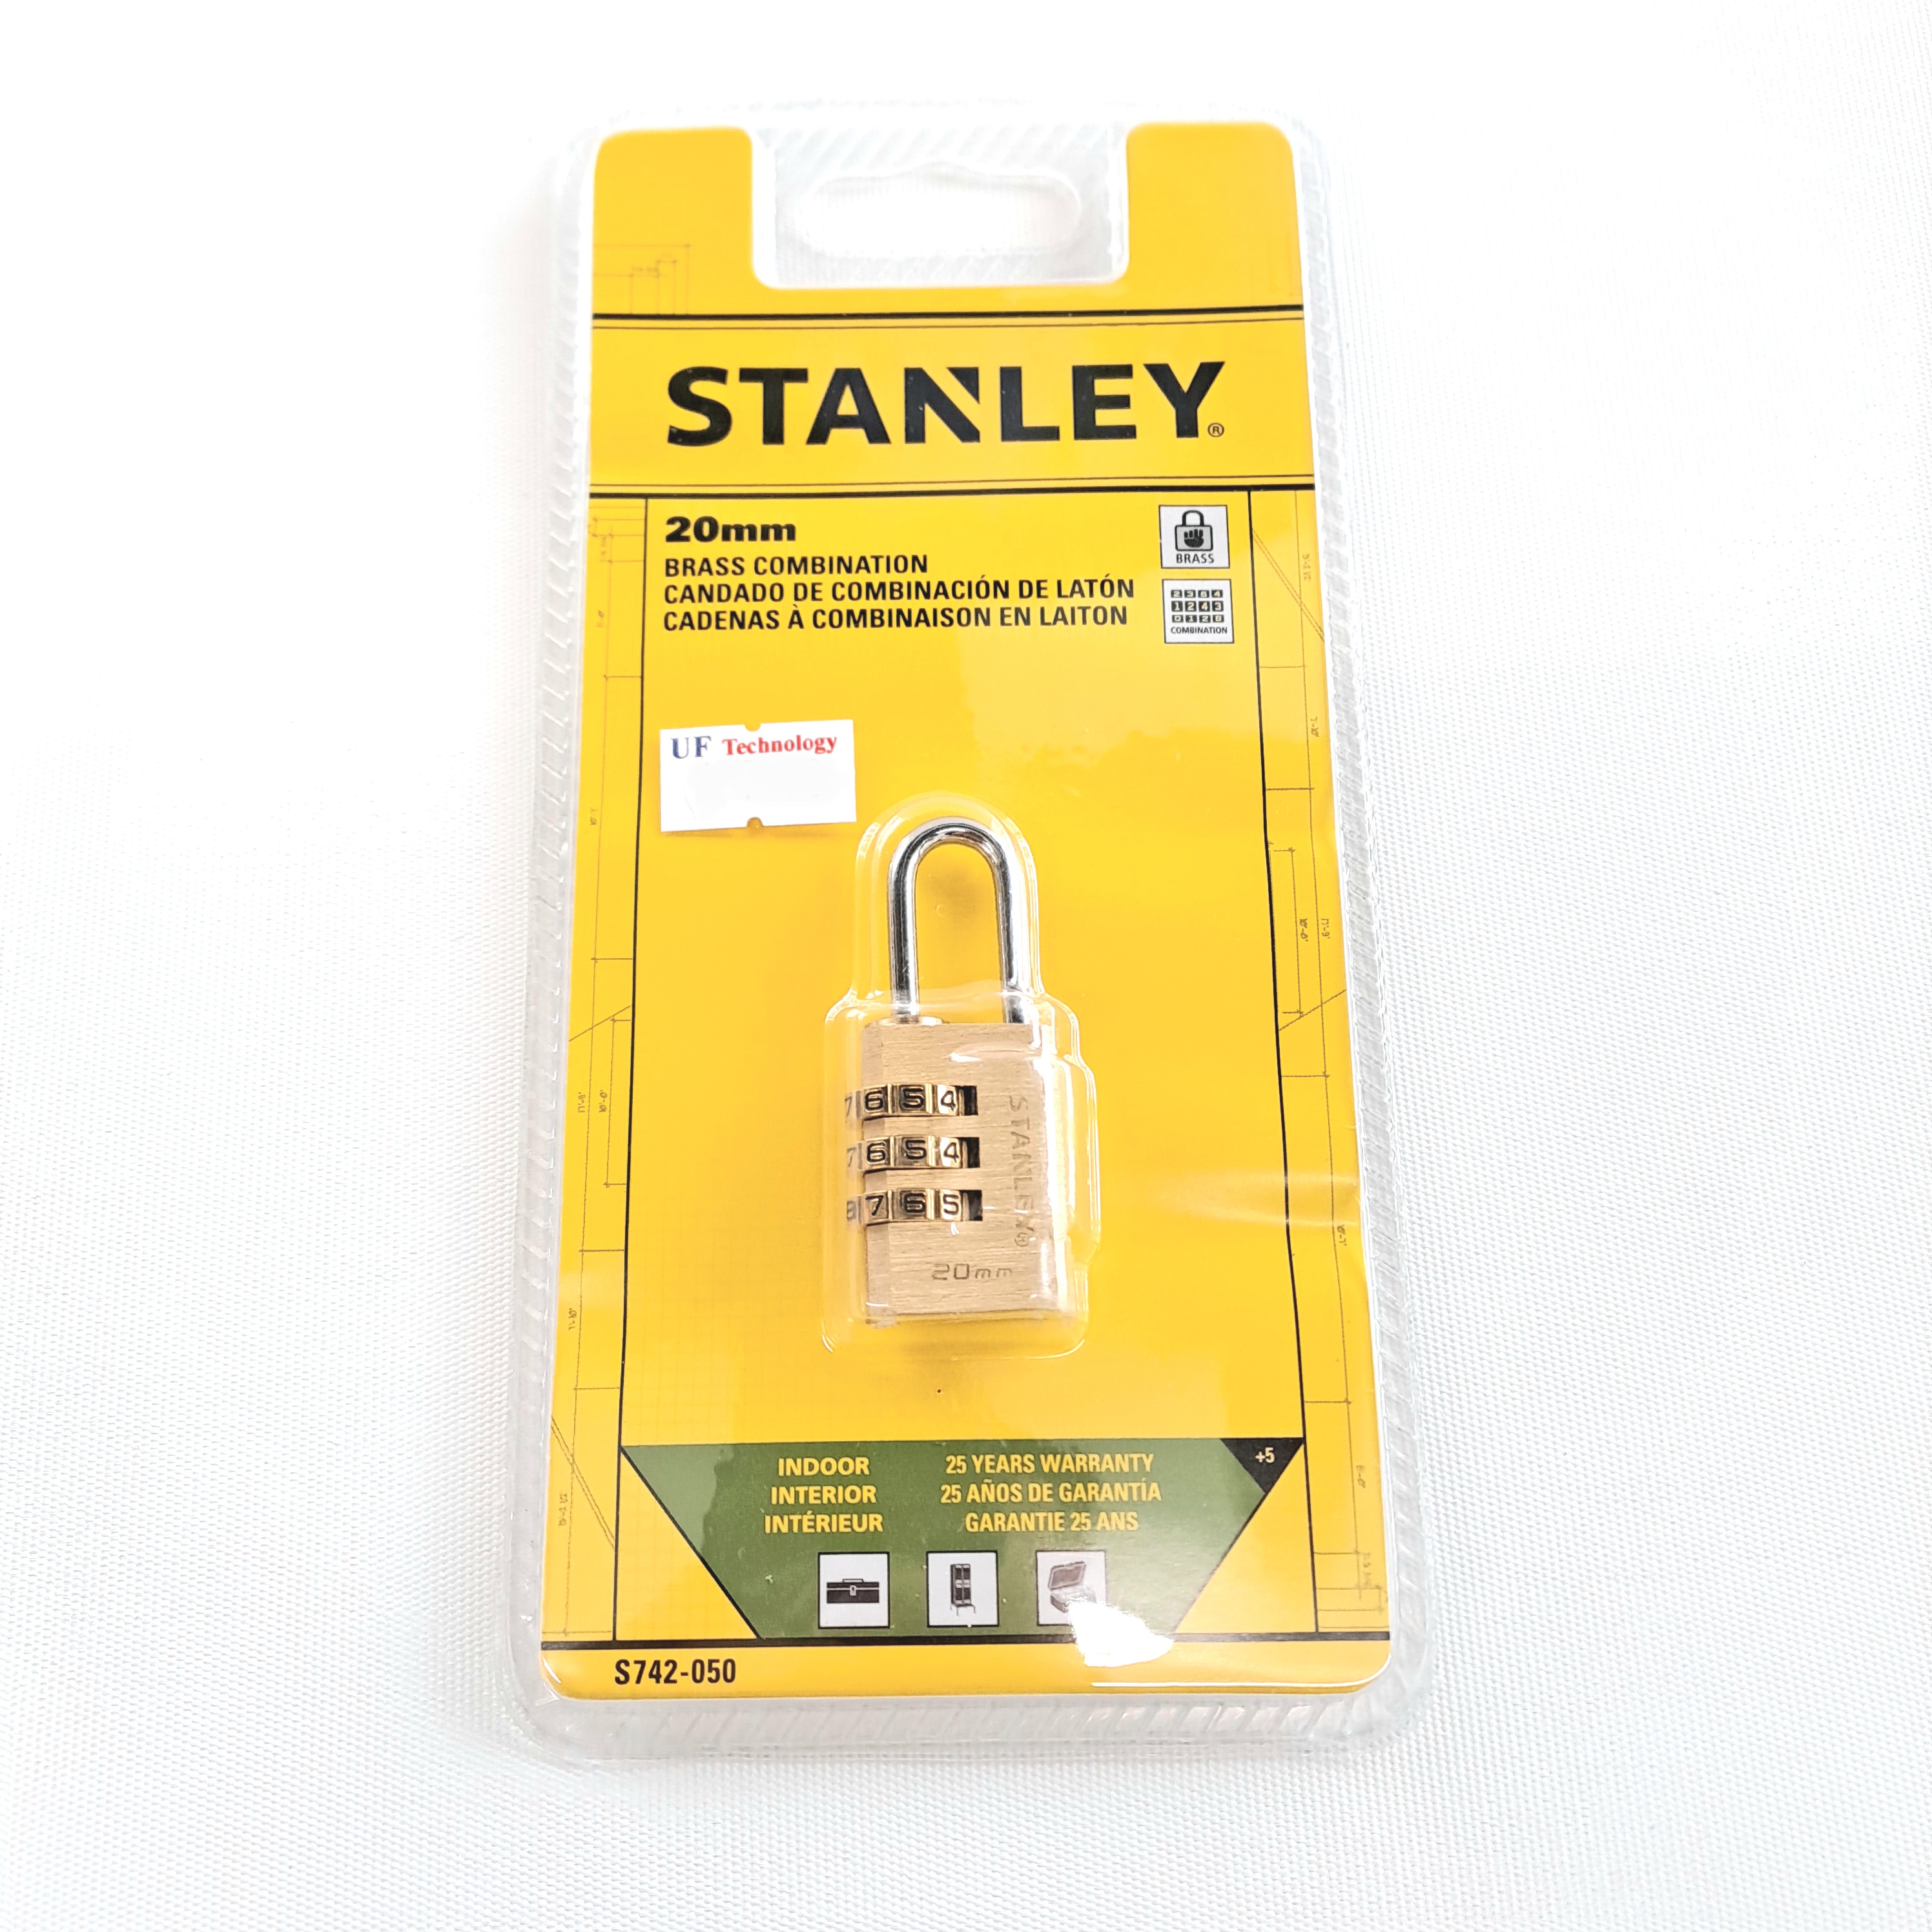 Stanley 20mm Solid brass combination padlock 3 Dig (70343)